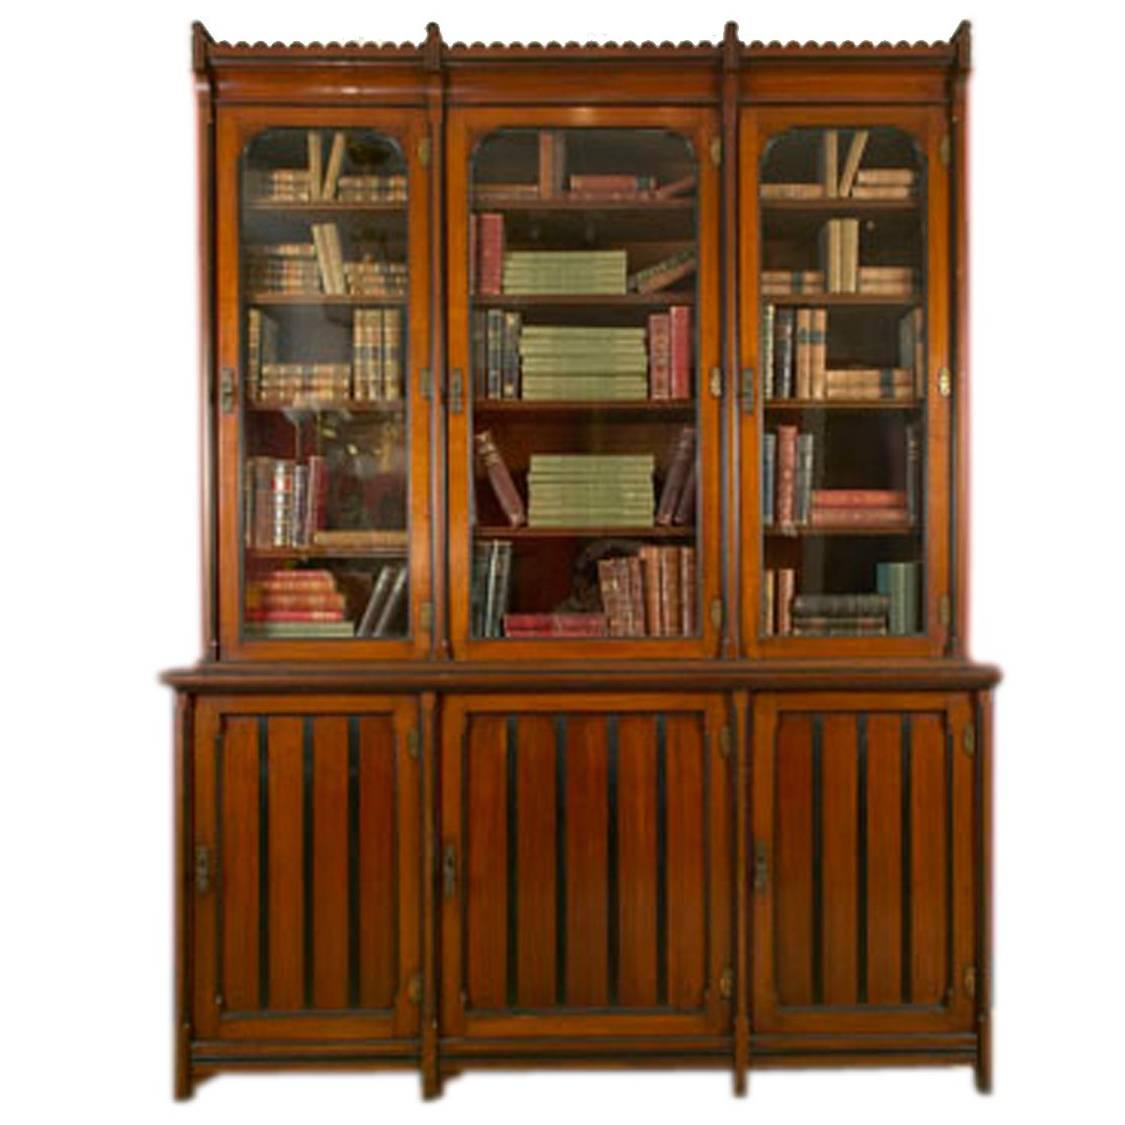 Gillows Arts and Crafts Bücherregal aus dem 19. Jahrhundert